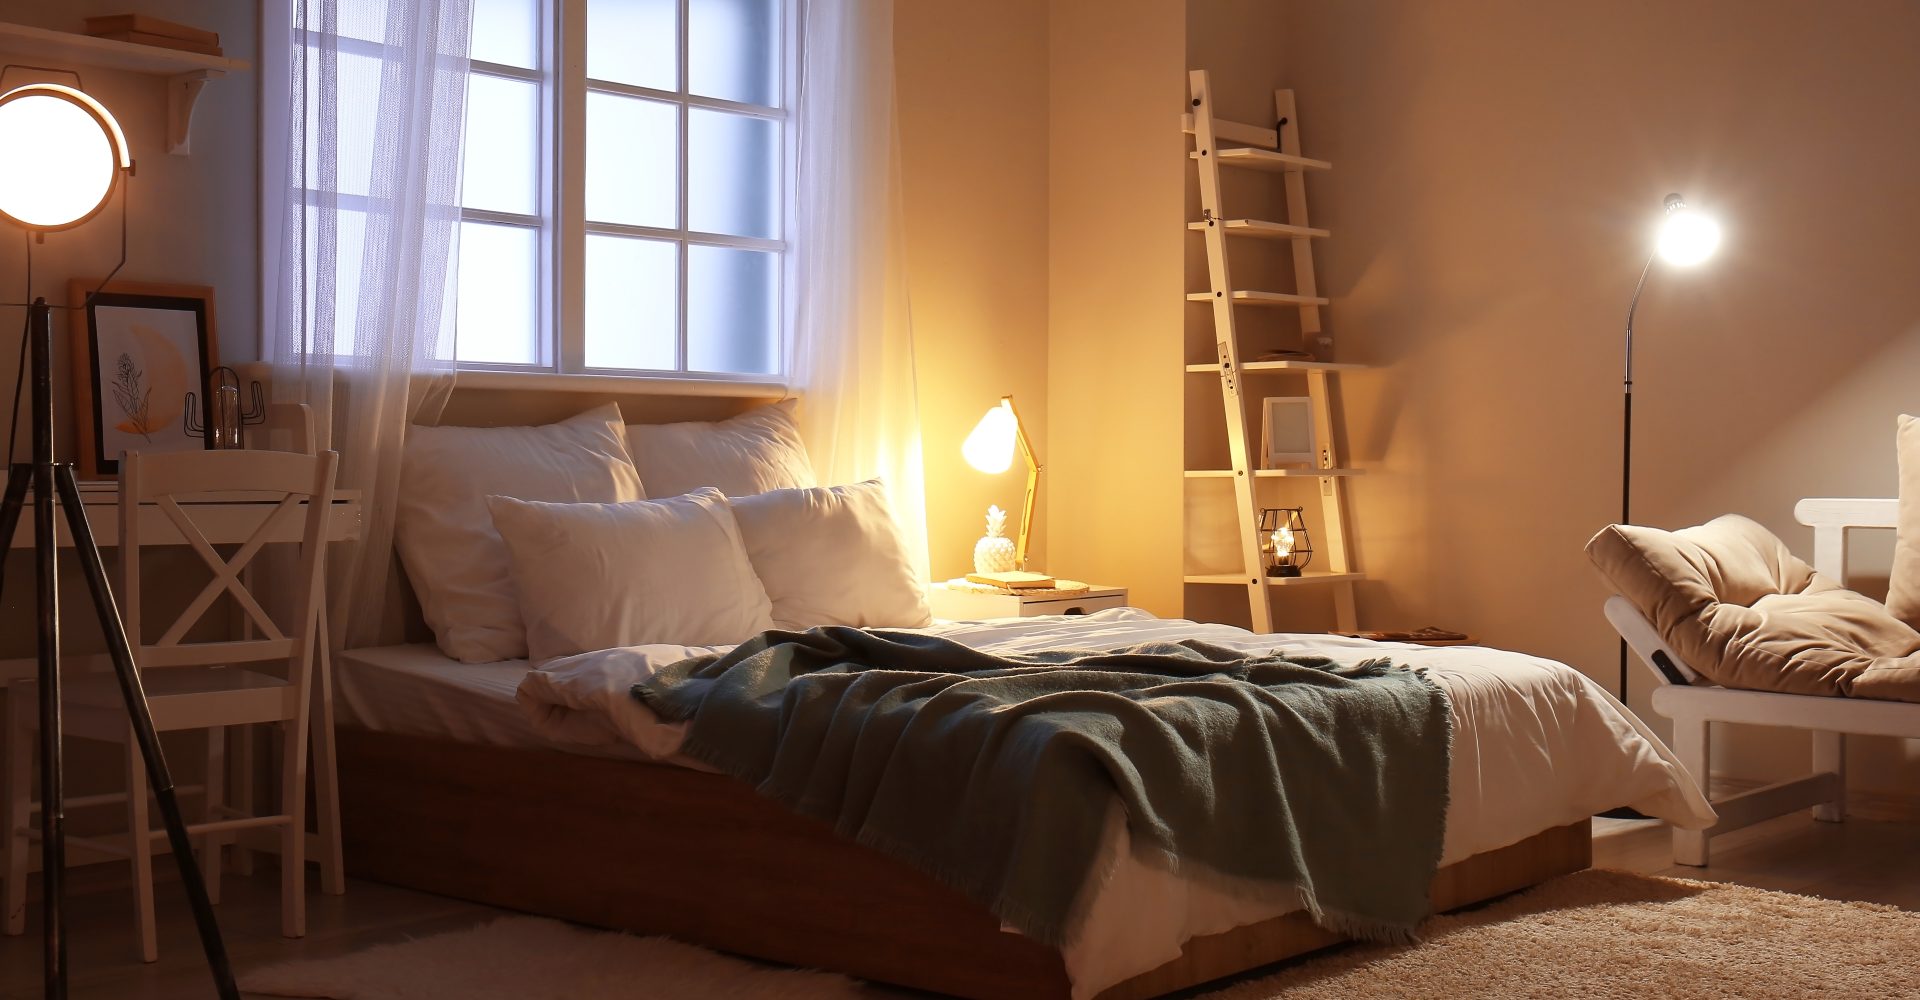 sleep environment with minimal light